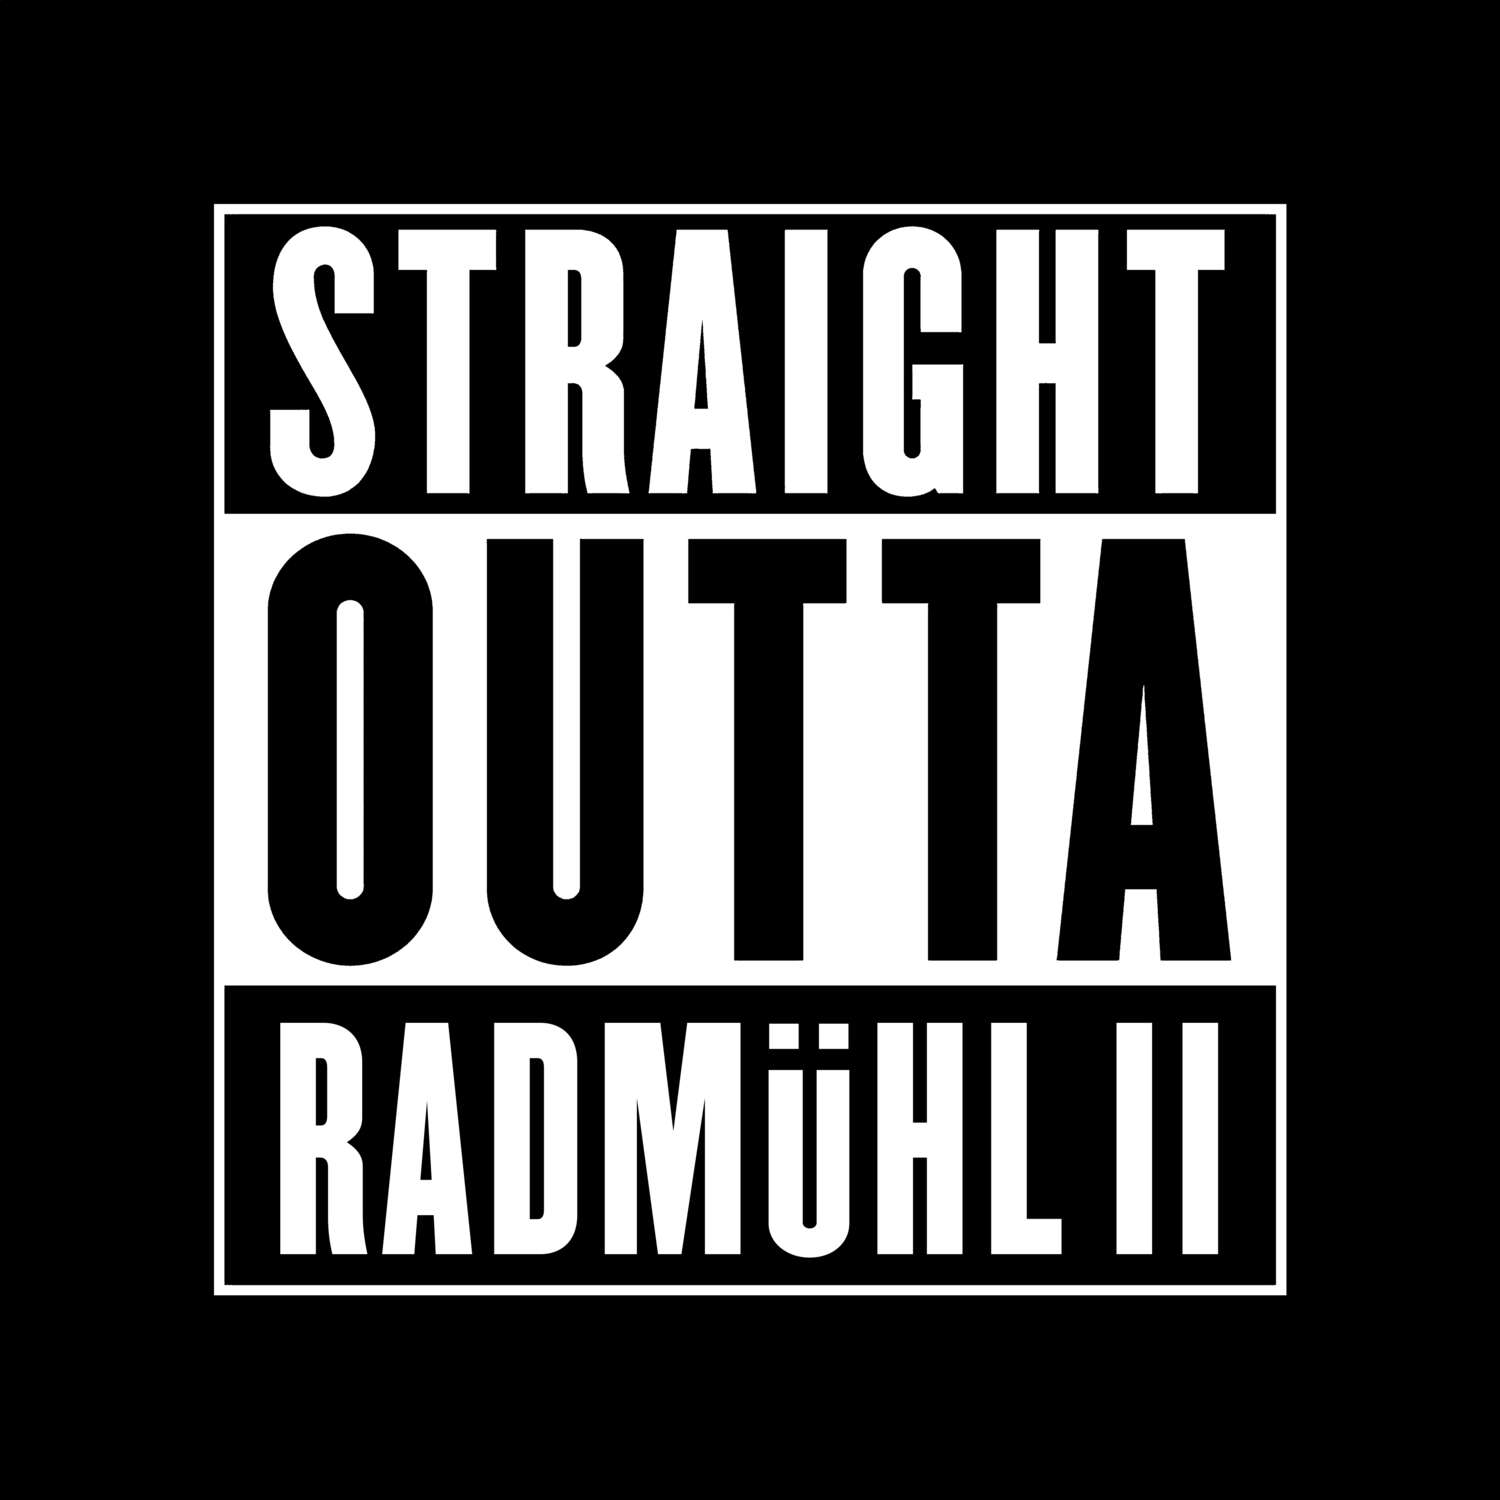 Radmühl II T-Shirt »Straight Outta«